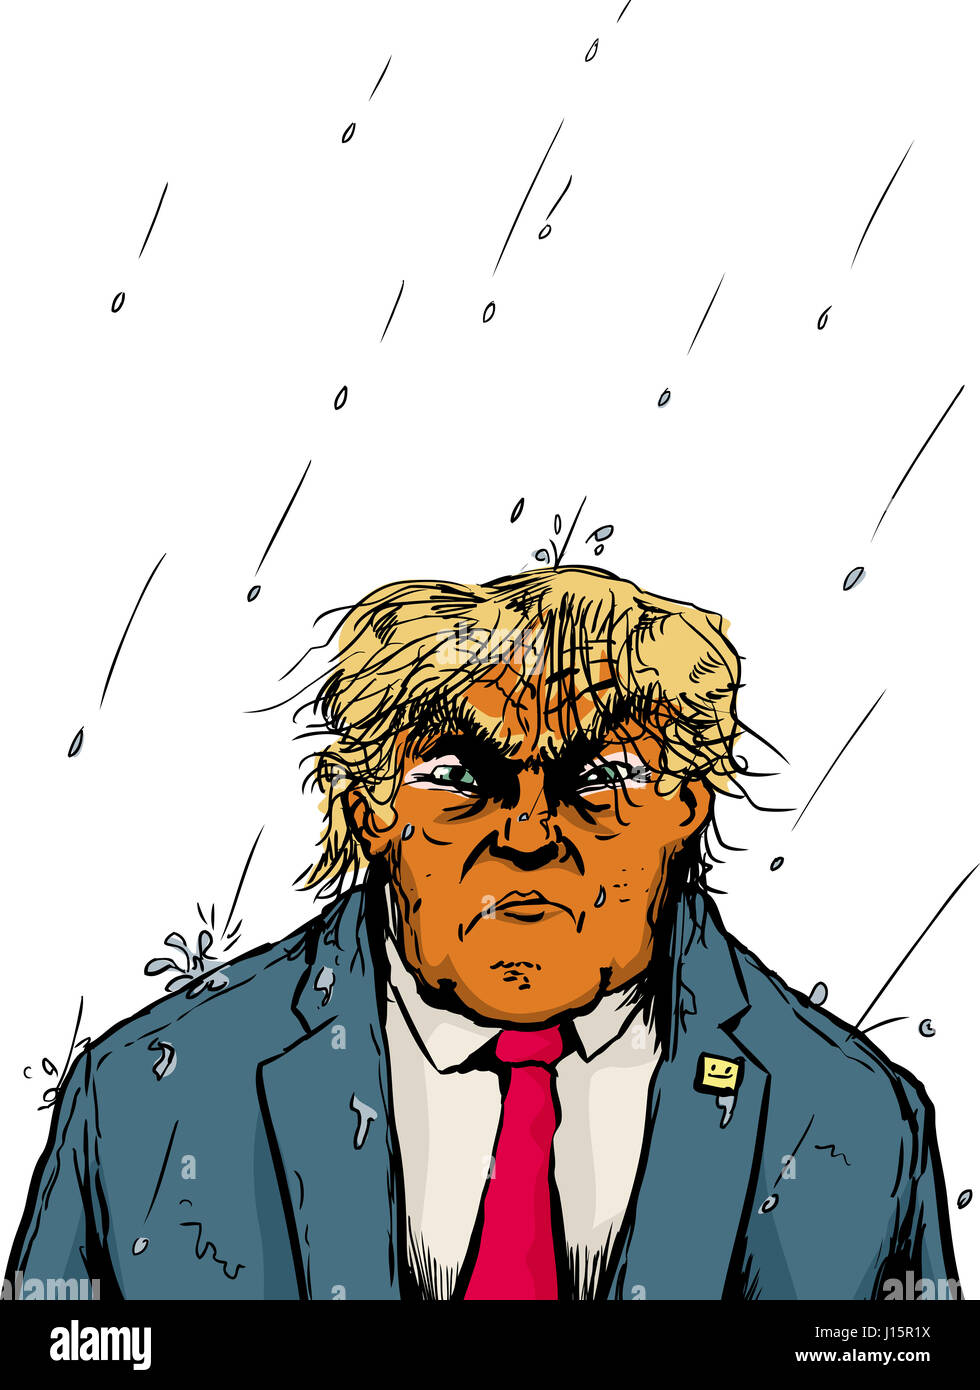 April 18, 2017. Caricature of soaking wet orange skinned Donald Trump in rain storm Stock Photo